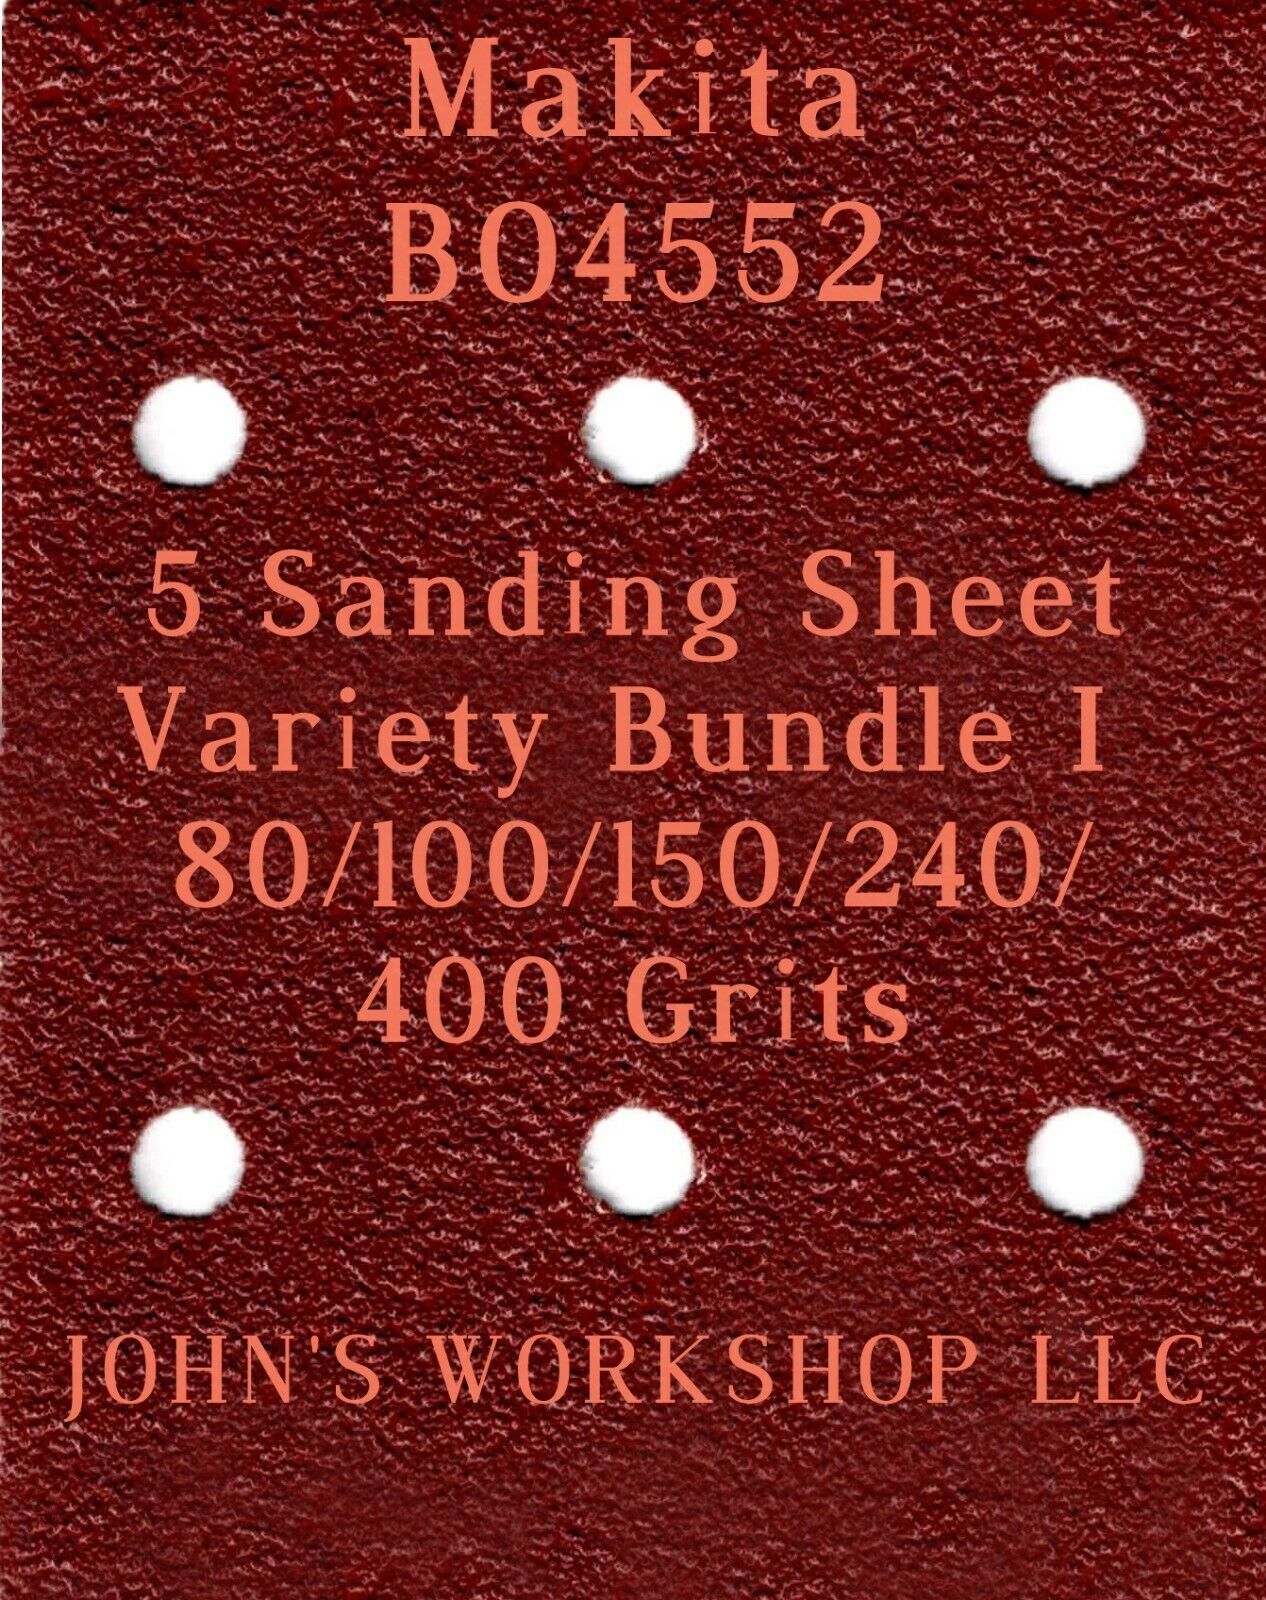 Makita BO4552 - 80/100/150/240/400 Grits - 5 Sandpaper Variety Bundle I - $4.99